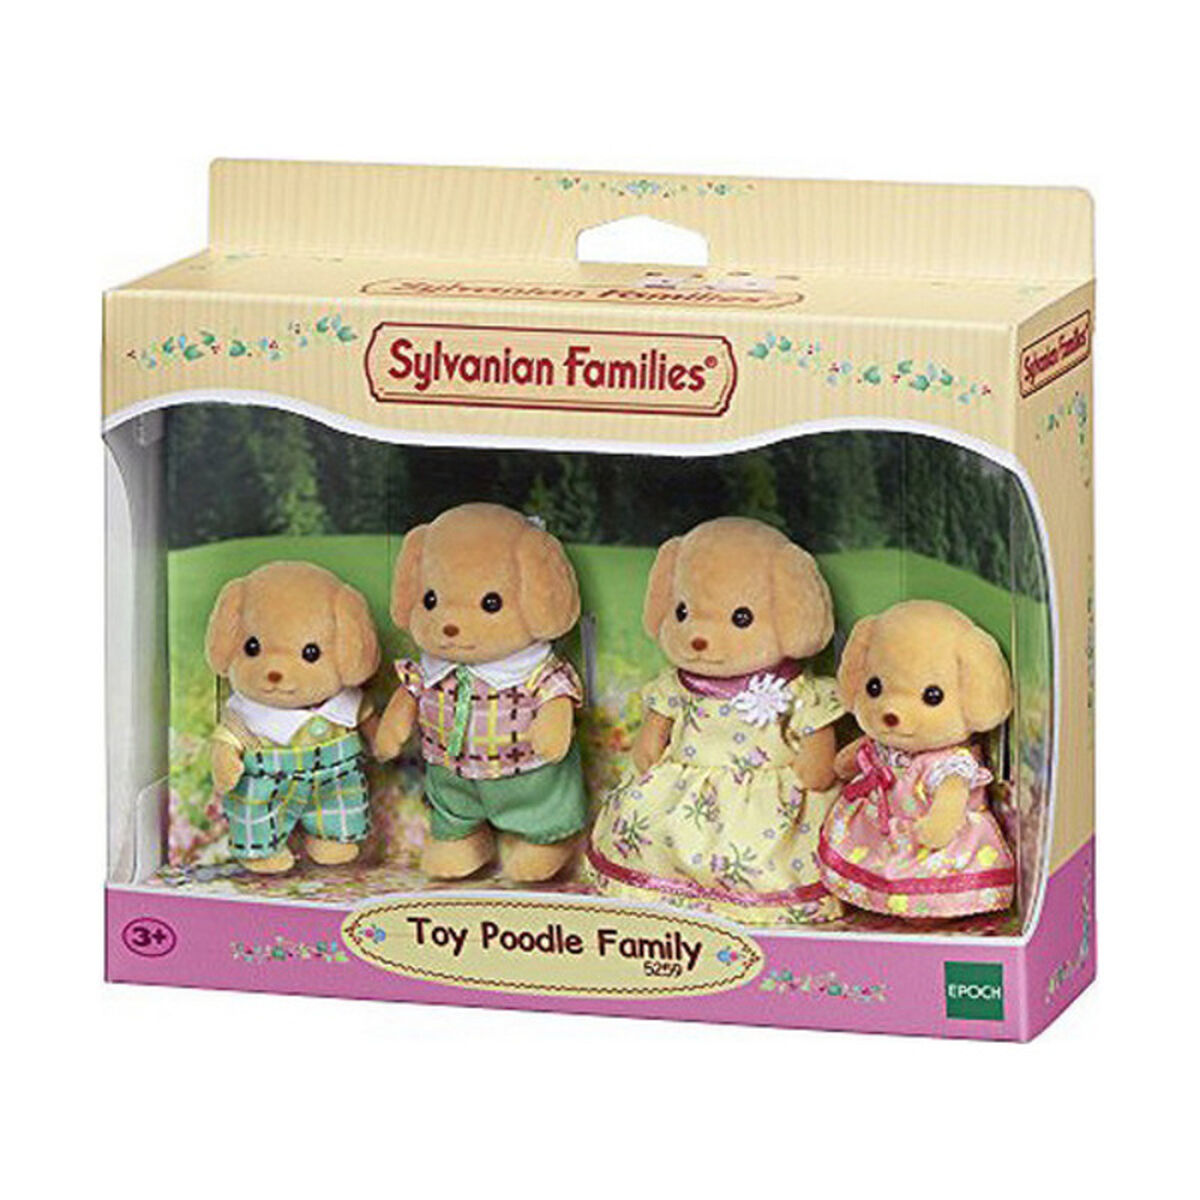 Figurines Toy Poodle Sylvanian Family Sylvanian Families 5259